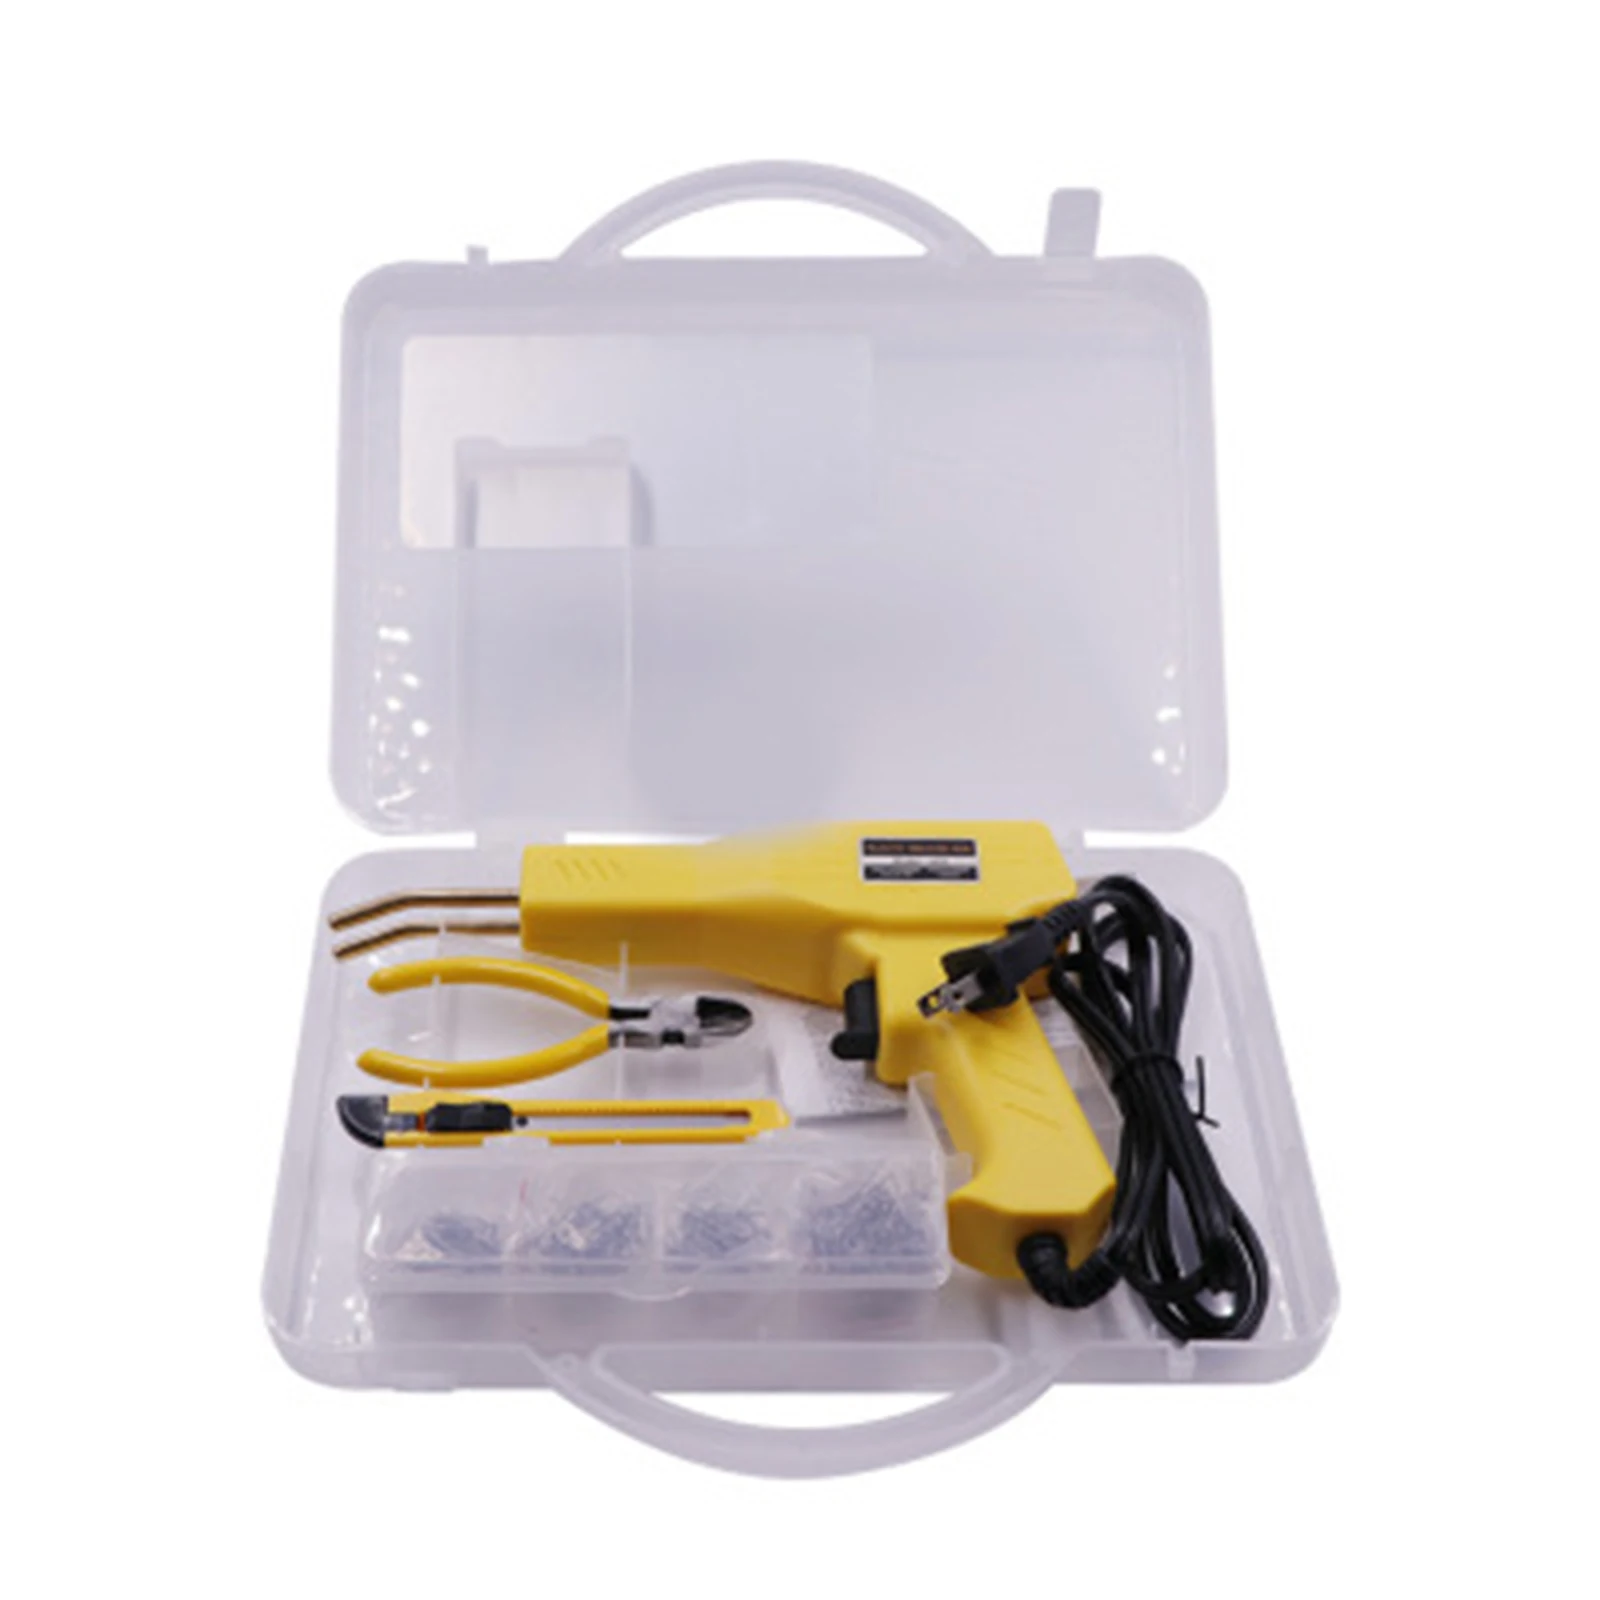 

Plastic Welder Kit For Bumper Repair 50w Hot Stapler Welding Repair Kit With Carry Case For Home Automotive Repair